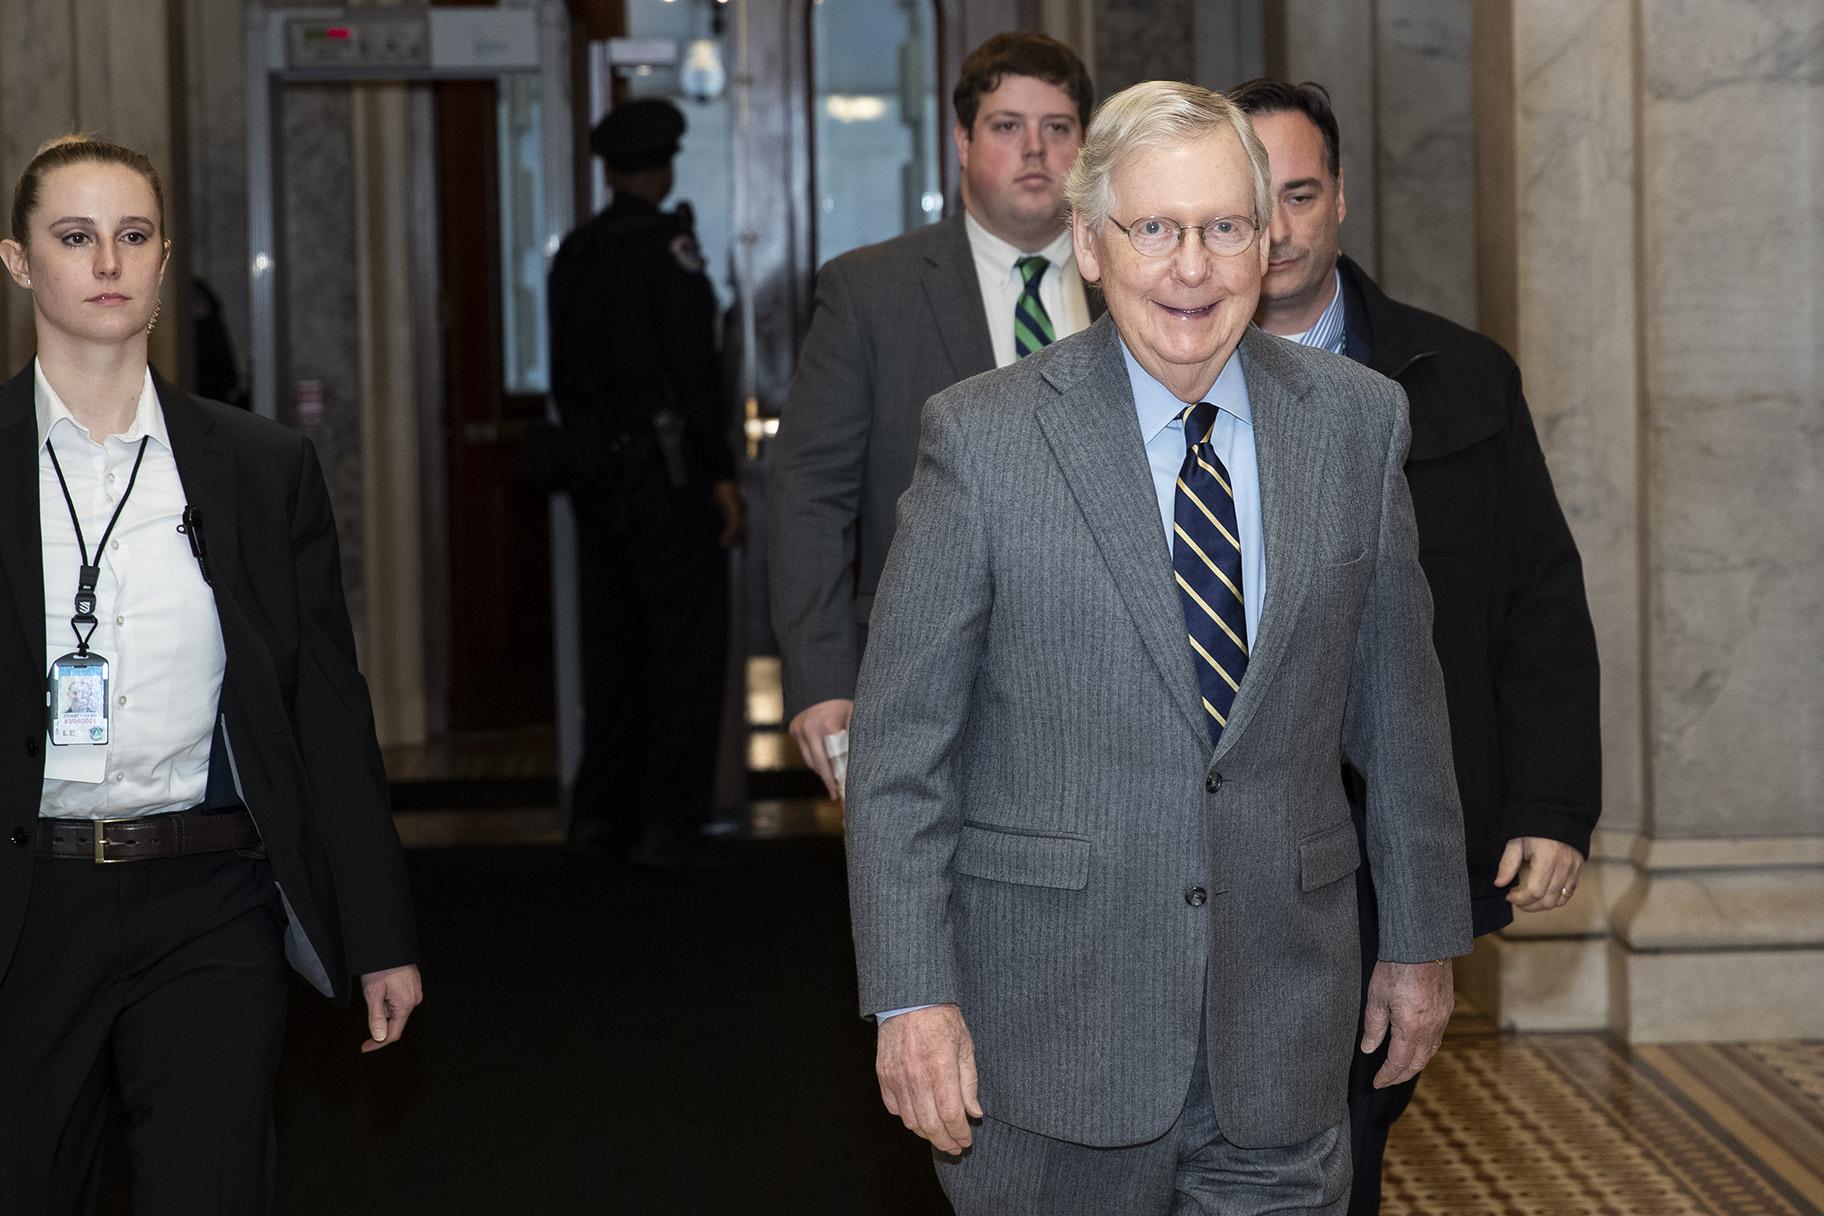 Senate Majority Leader Mitch McConnell of Kentucky, arrives on Capitol Hill, Monday, Feb. 3, 2020 in Washington. (AP Photo / Alex Brandon)